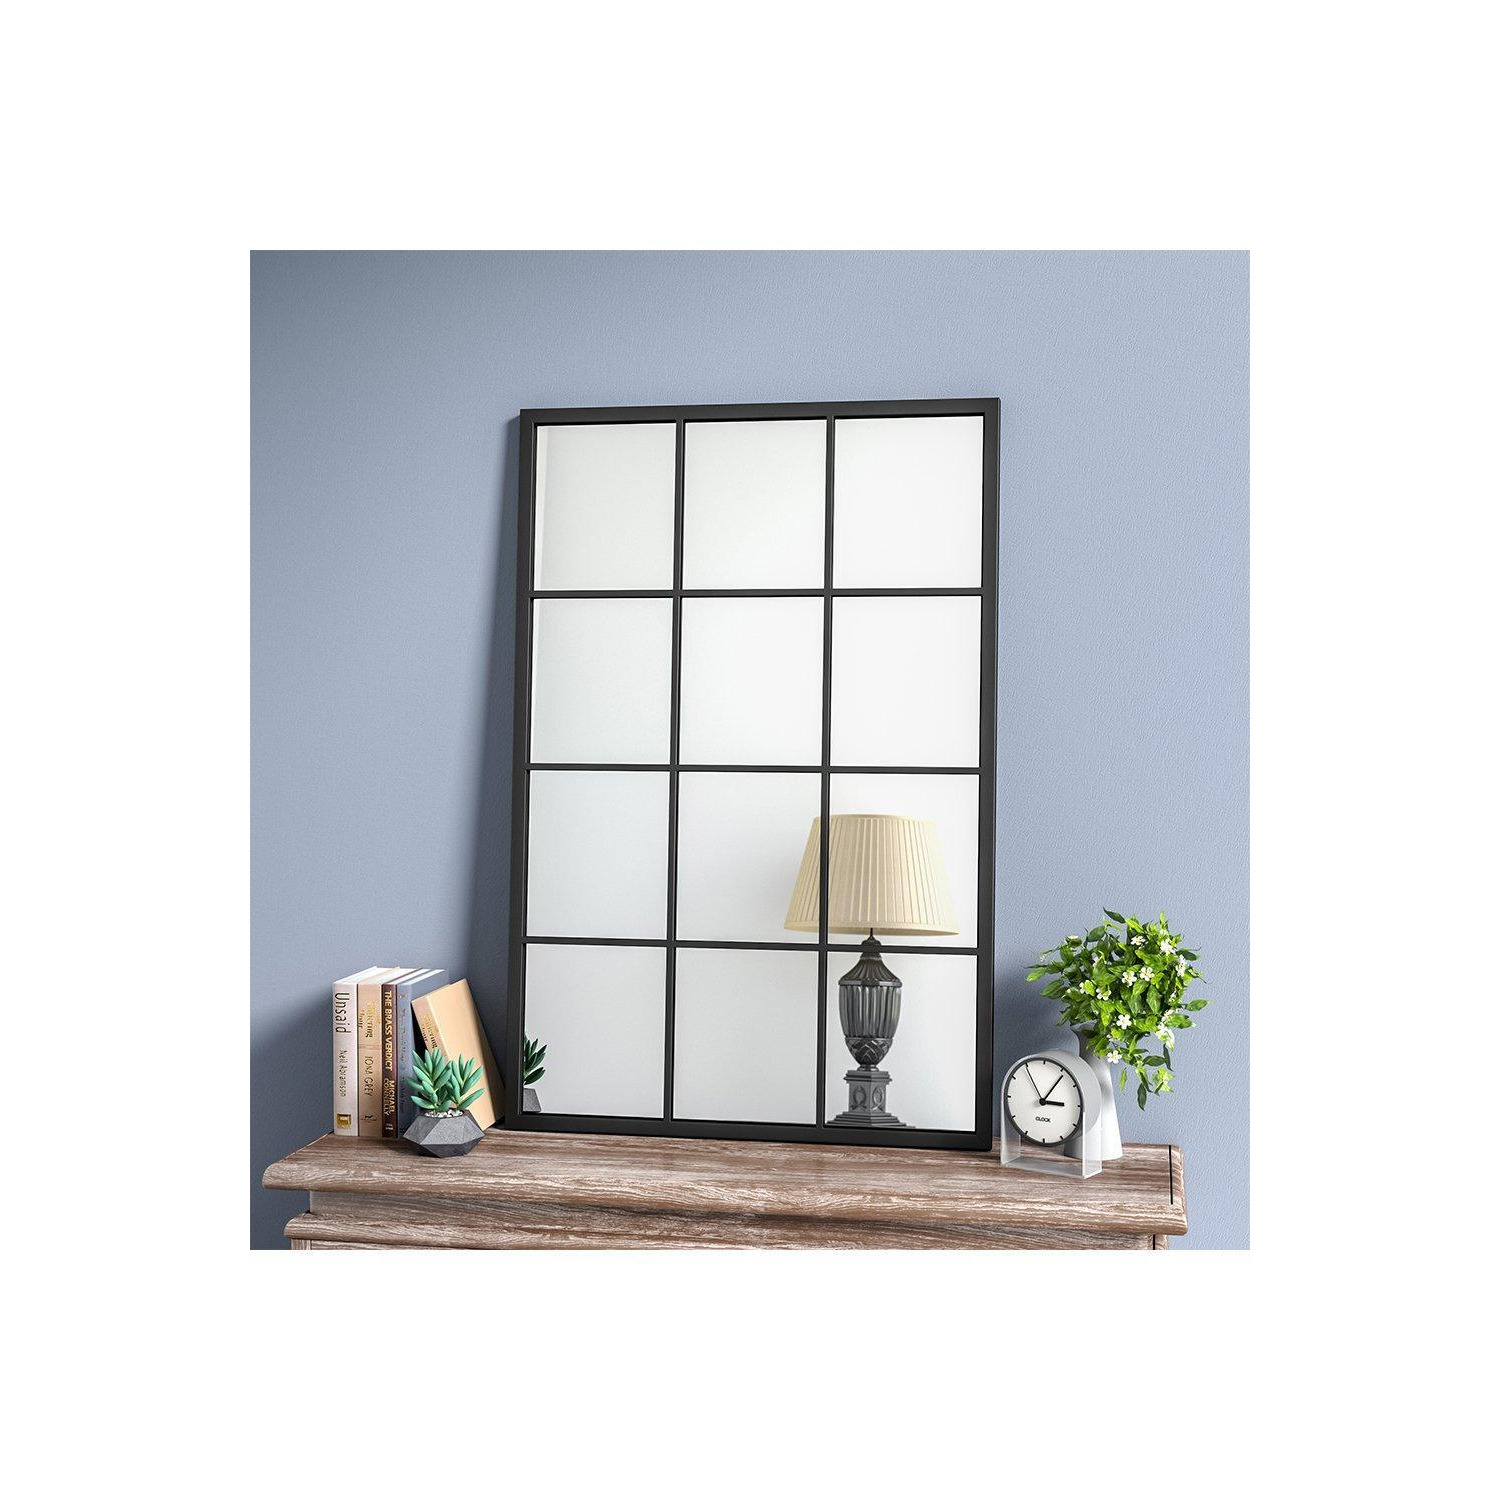 60cm W x 90cm H Rectangular 12-Pane Window Mirror with Black Metal Frame - image 1